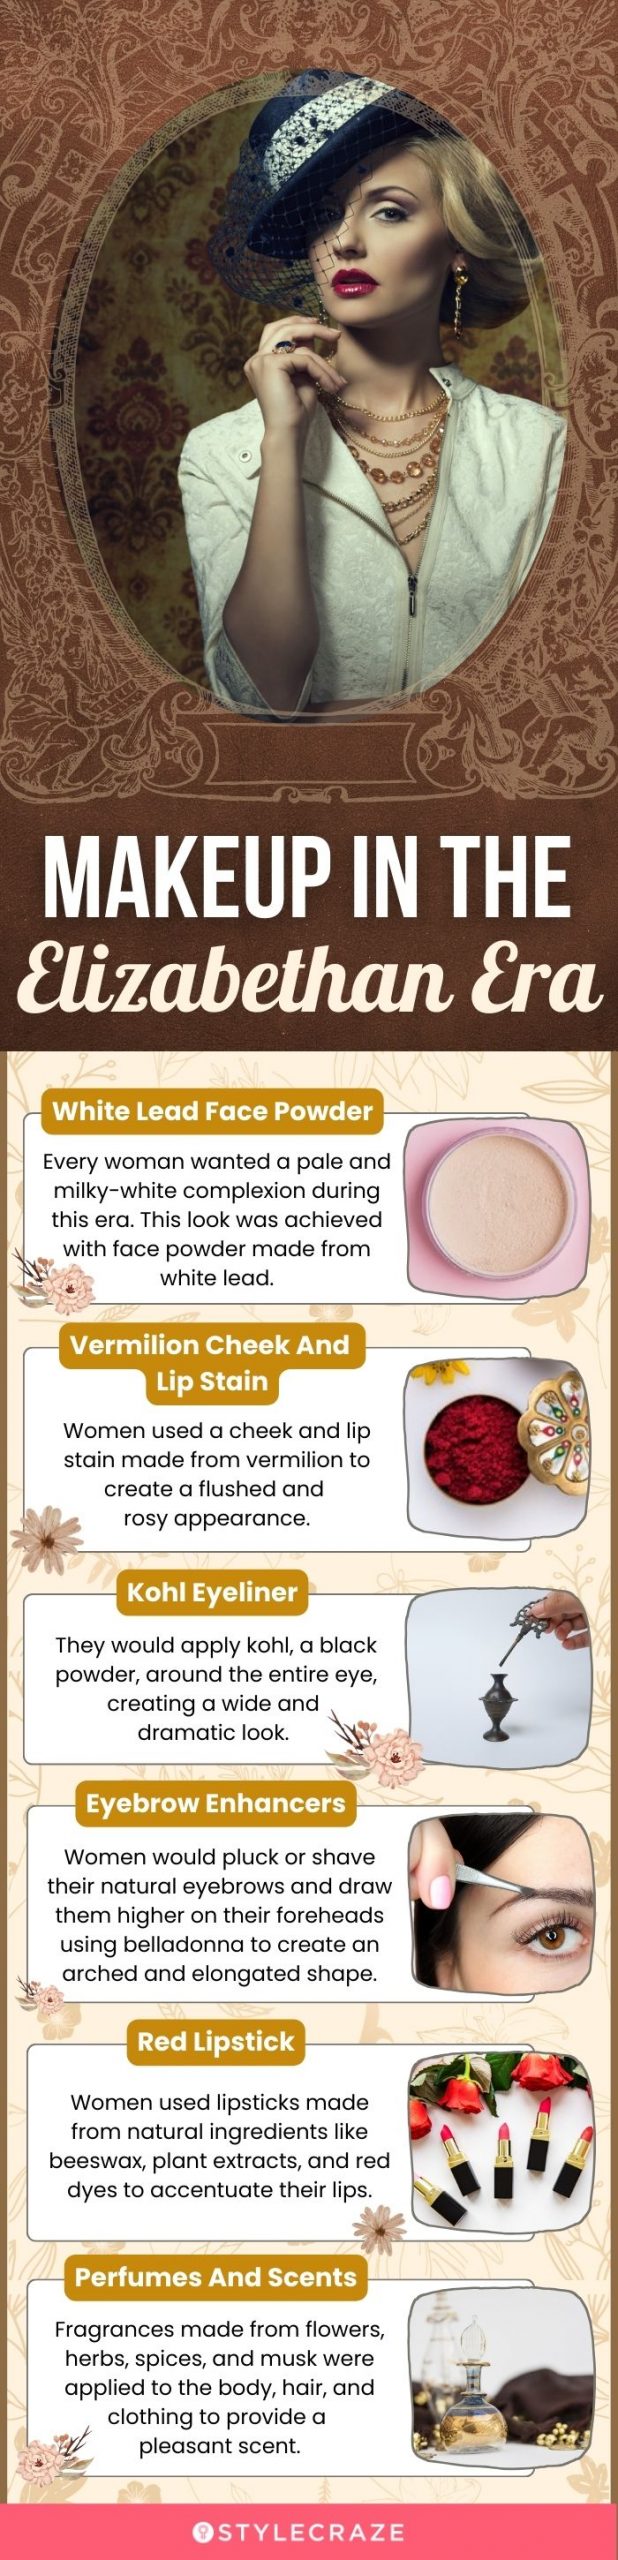 makeup in the elizabethan era (infographic)